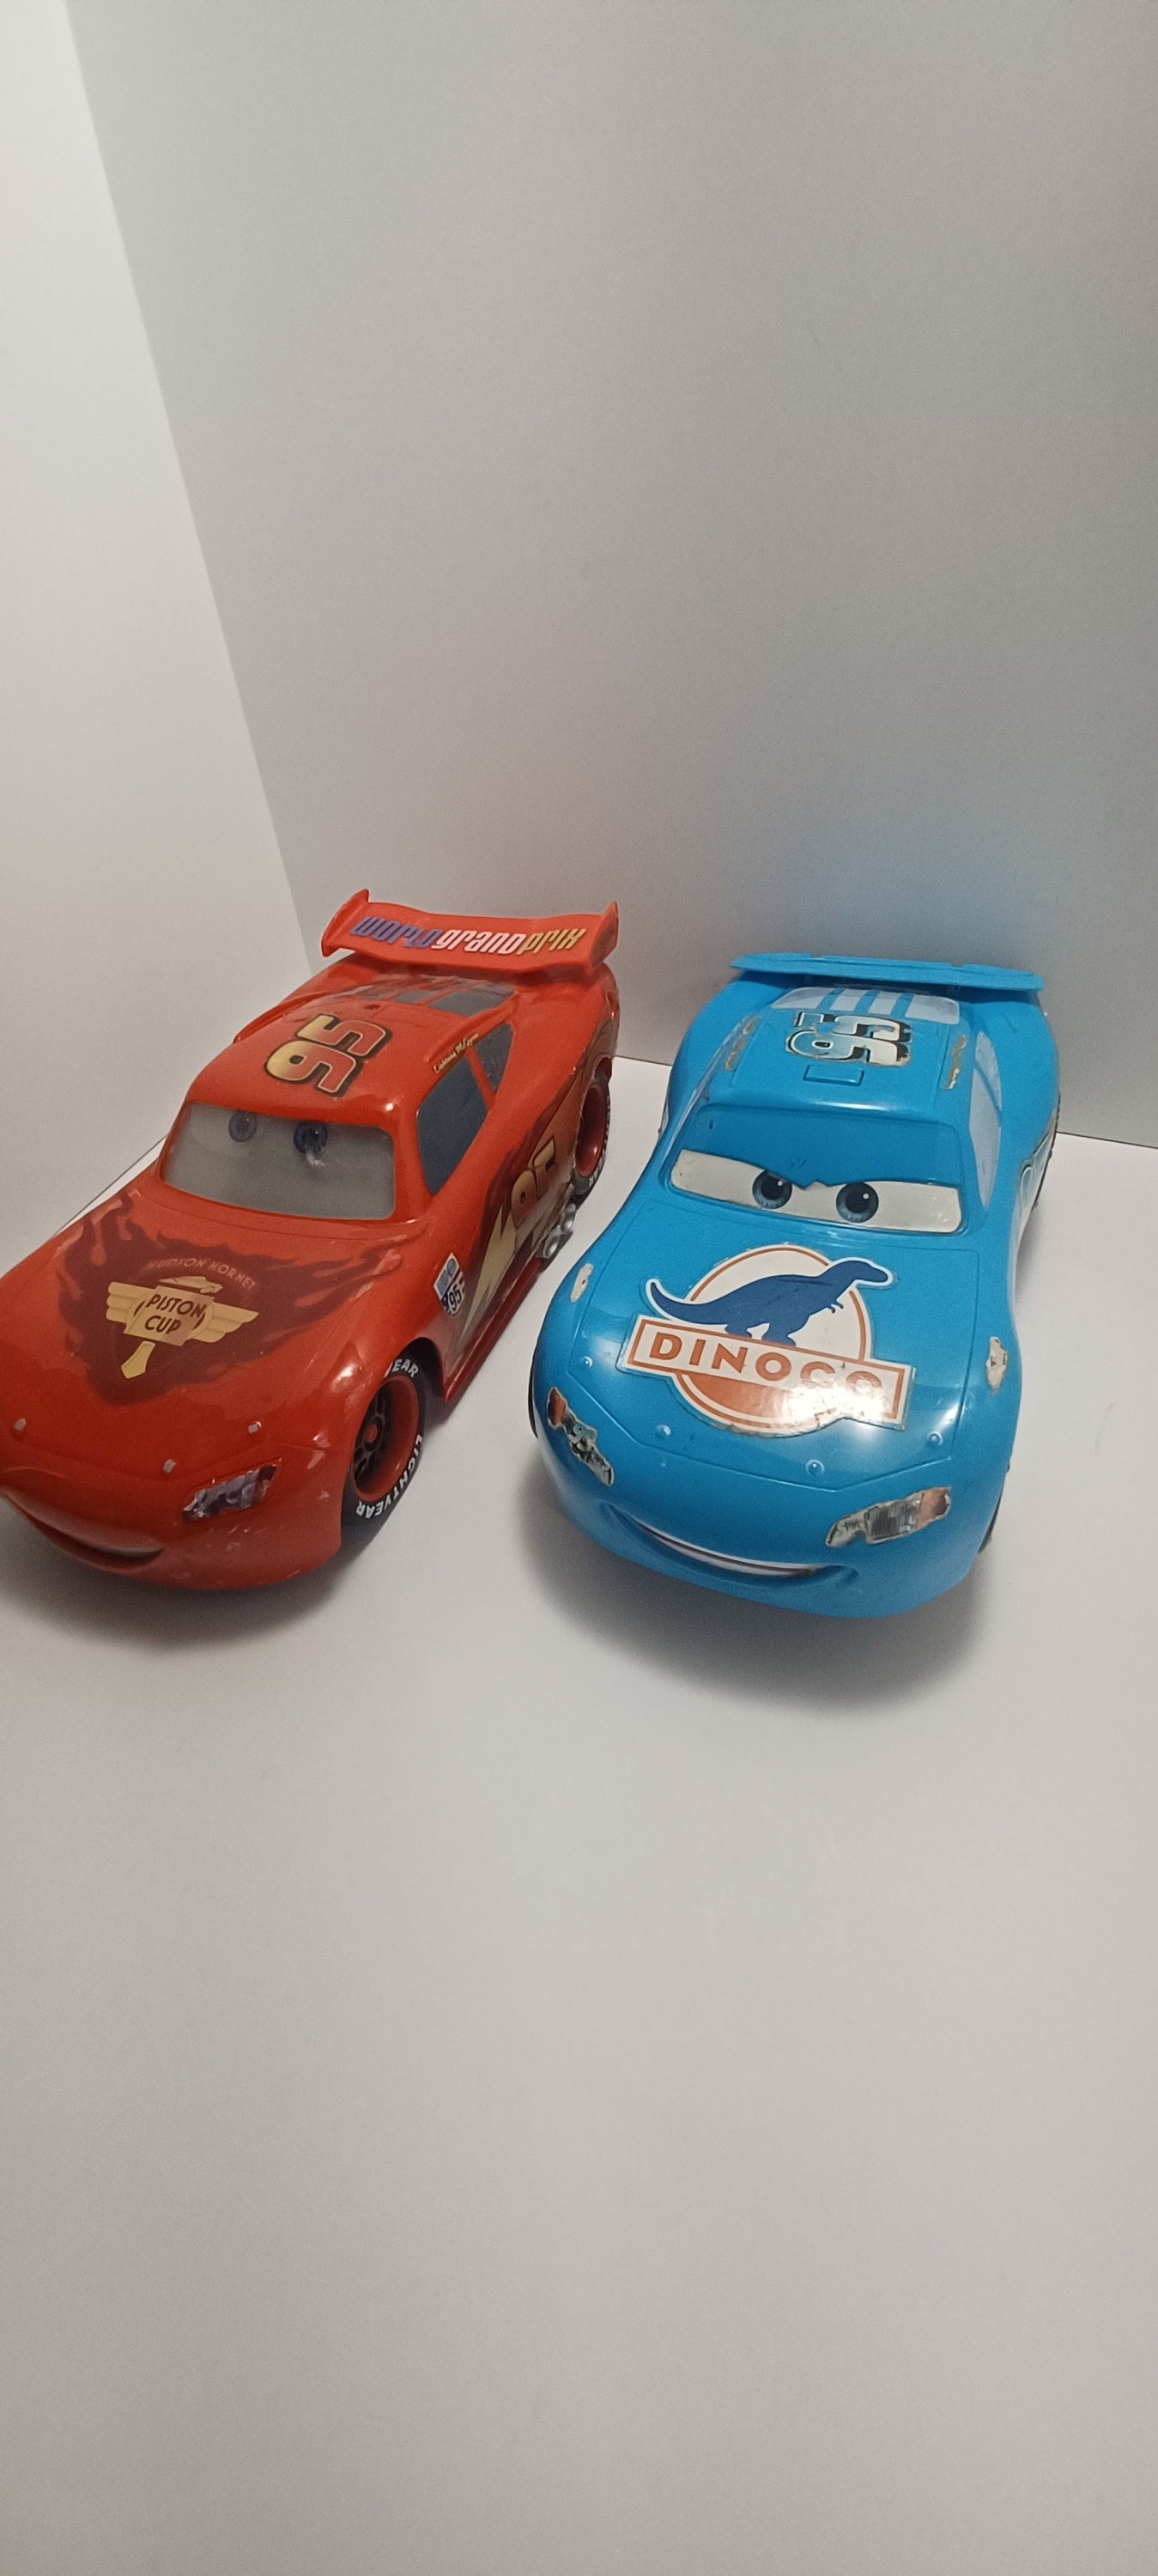 Disney Cars Dinoco & Lightning Mcqueen Big Toy Cars Disney - Etsy UK